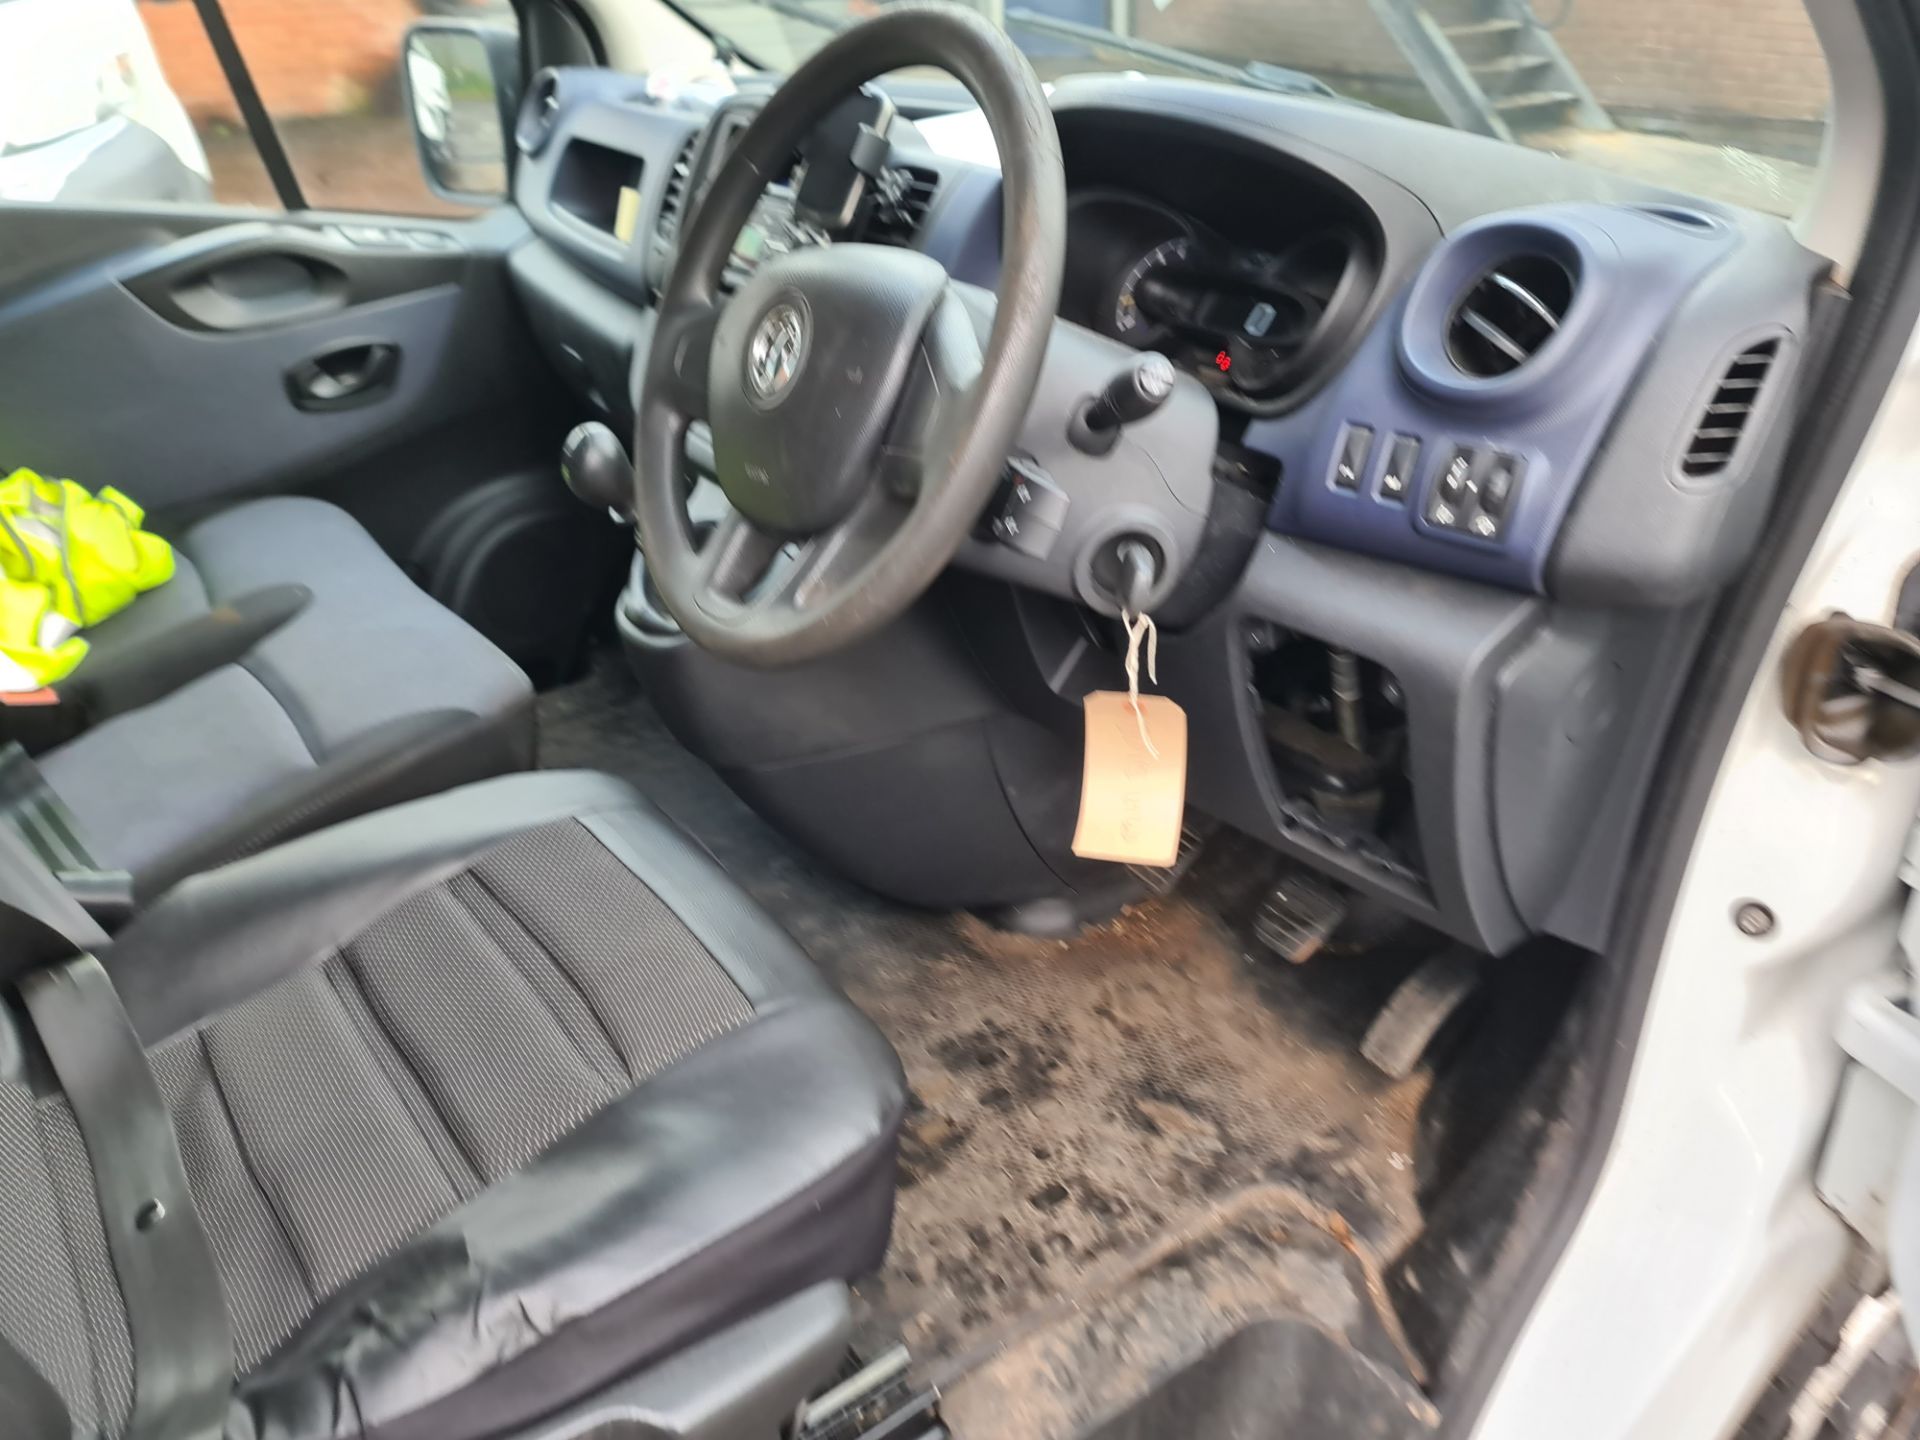 2015 Vauxhall Vivaro 2900 CDTi panel van - Image 13 of 81